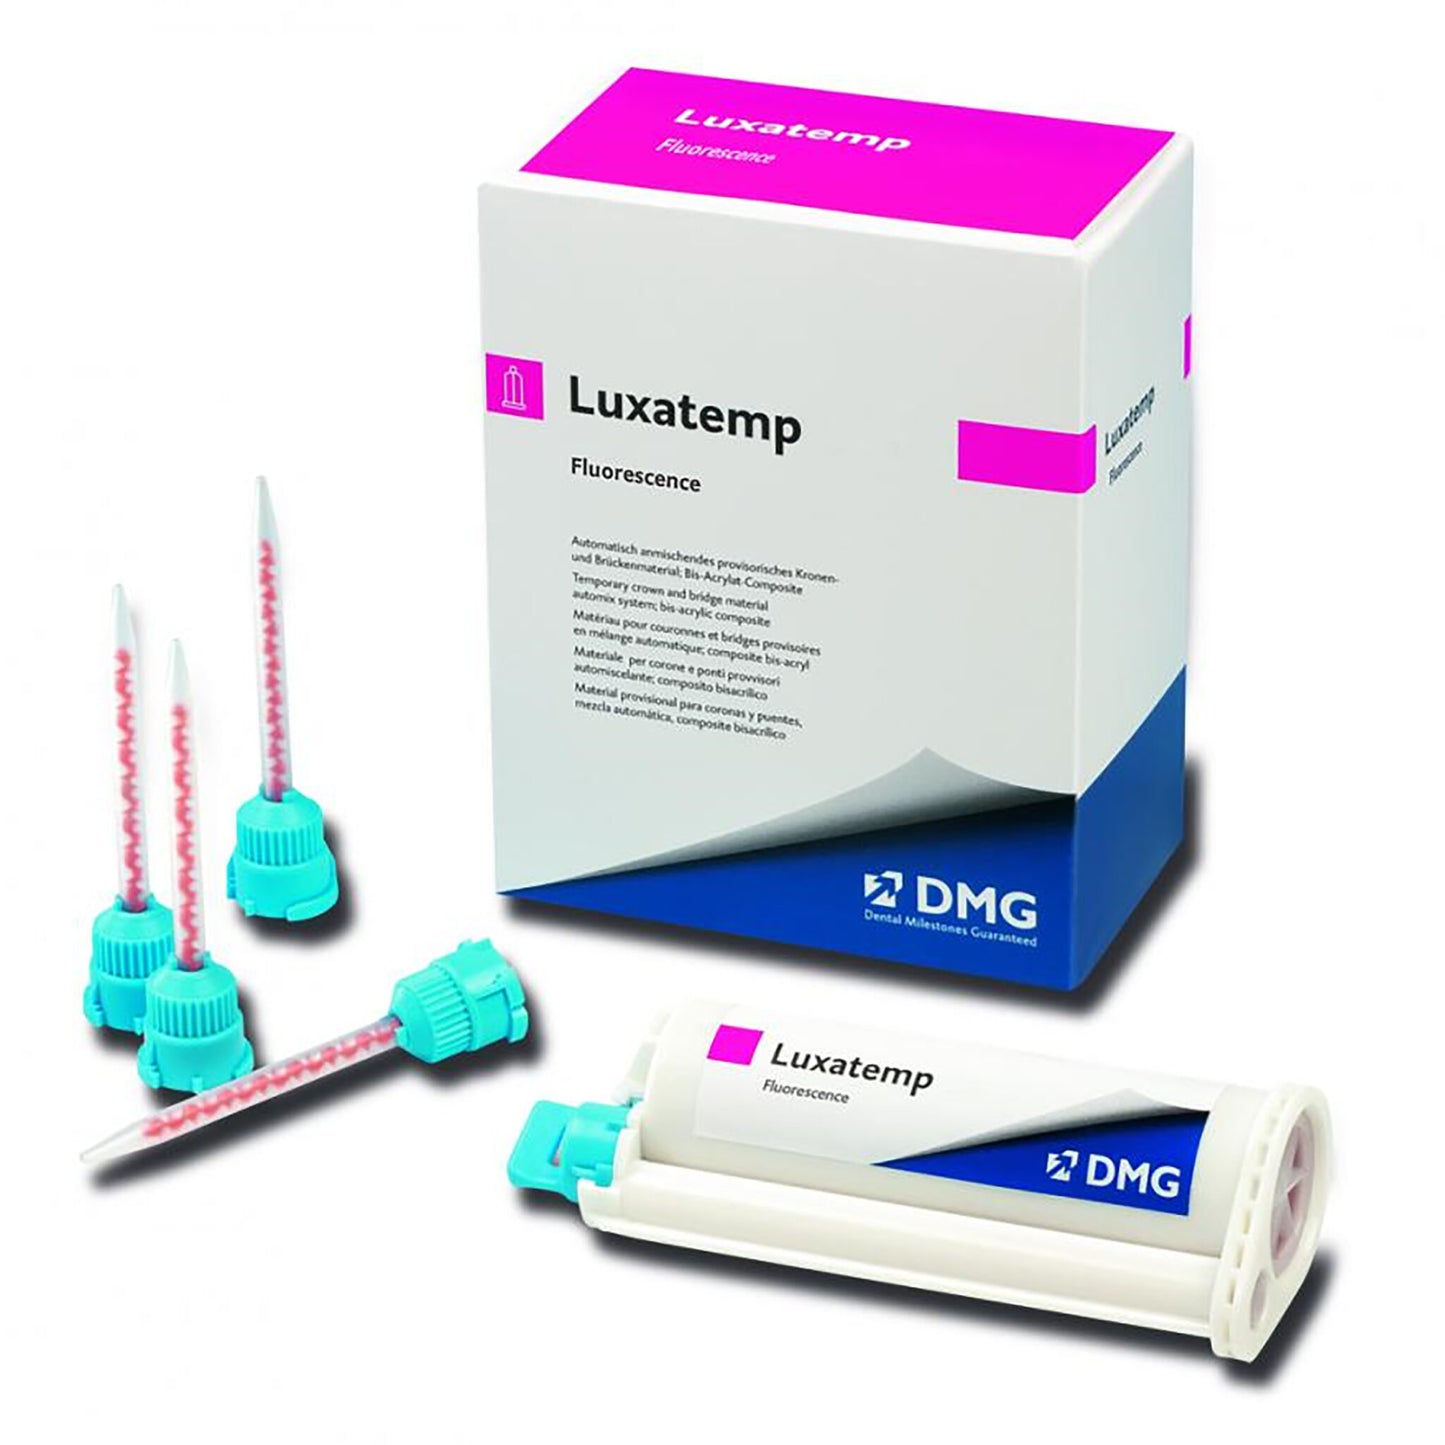 Luxatemp Fluorescence Smartmix - A2 (1-15gm Syringe, 10 Smartmix Tips)